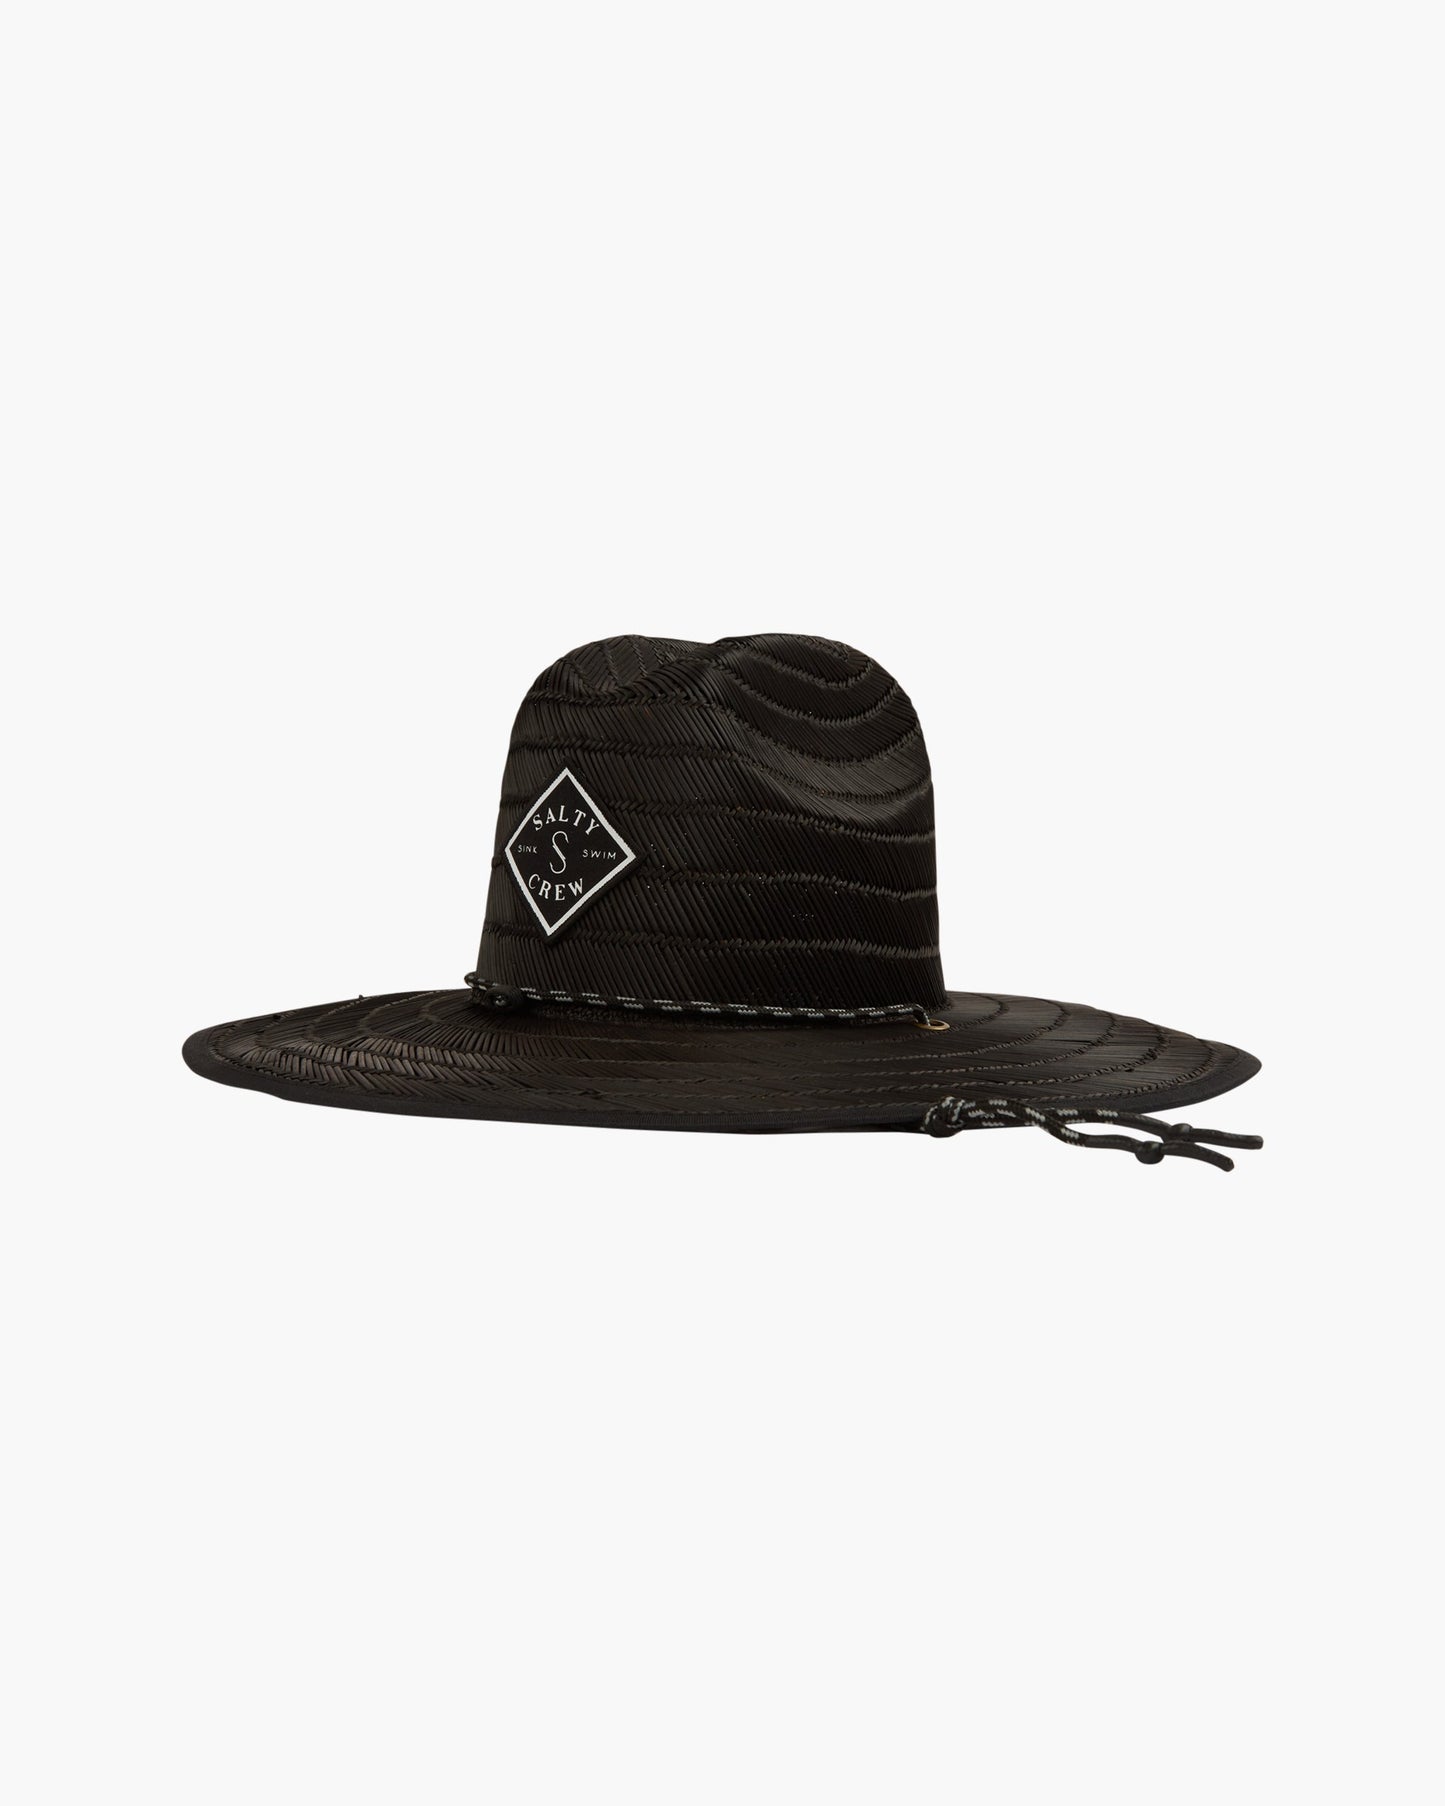 TIPPET LIFEGUARD HAT - Black